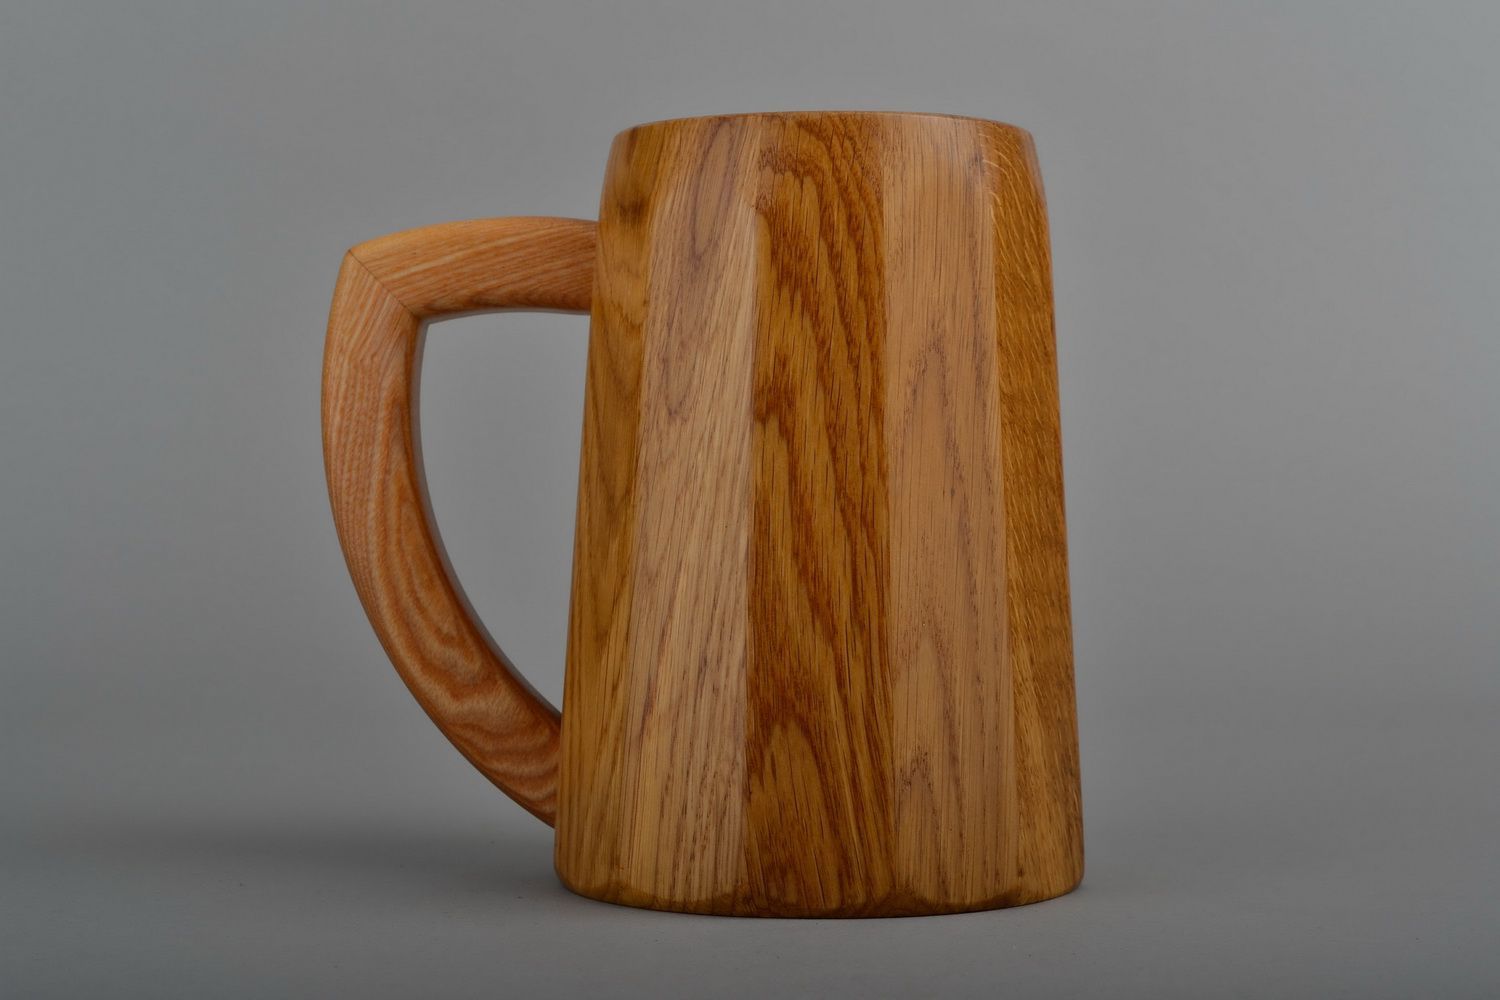 Beer mug made of wood